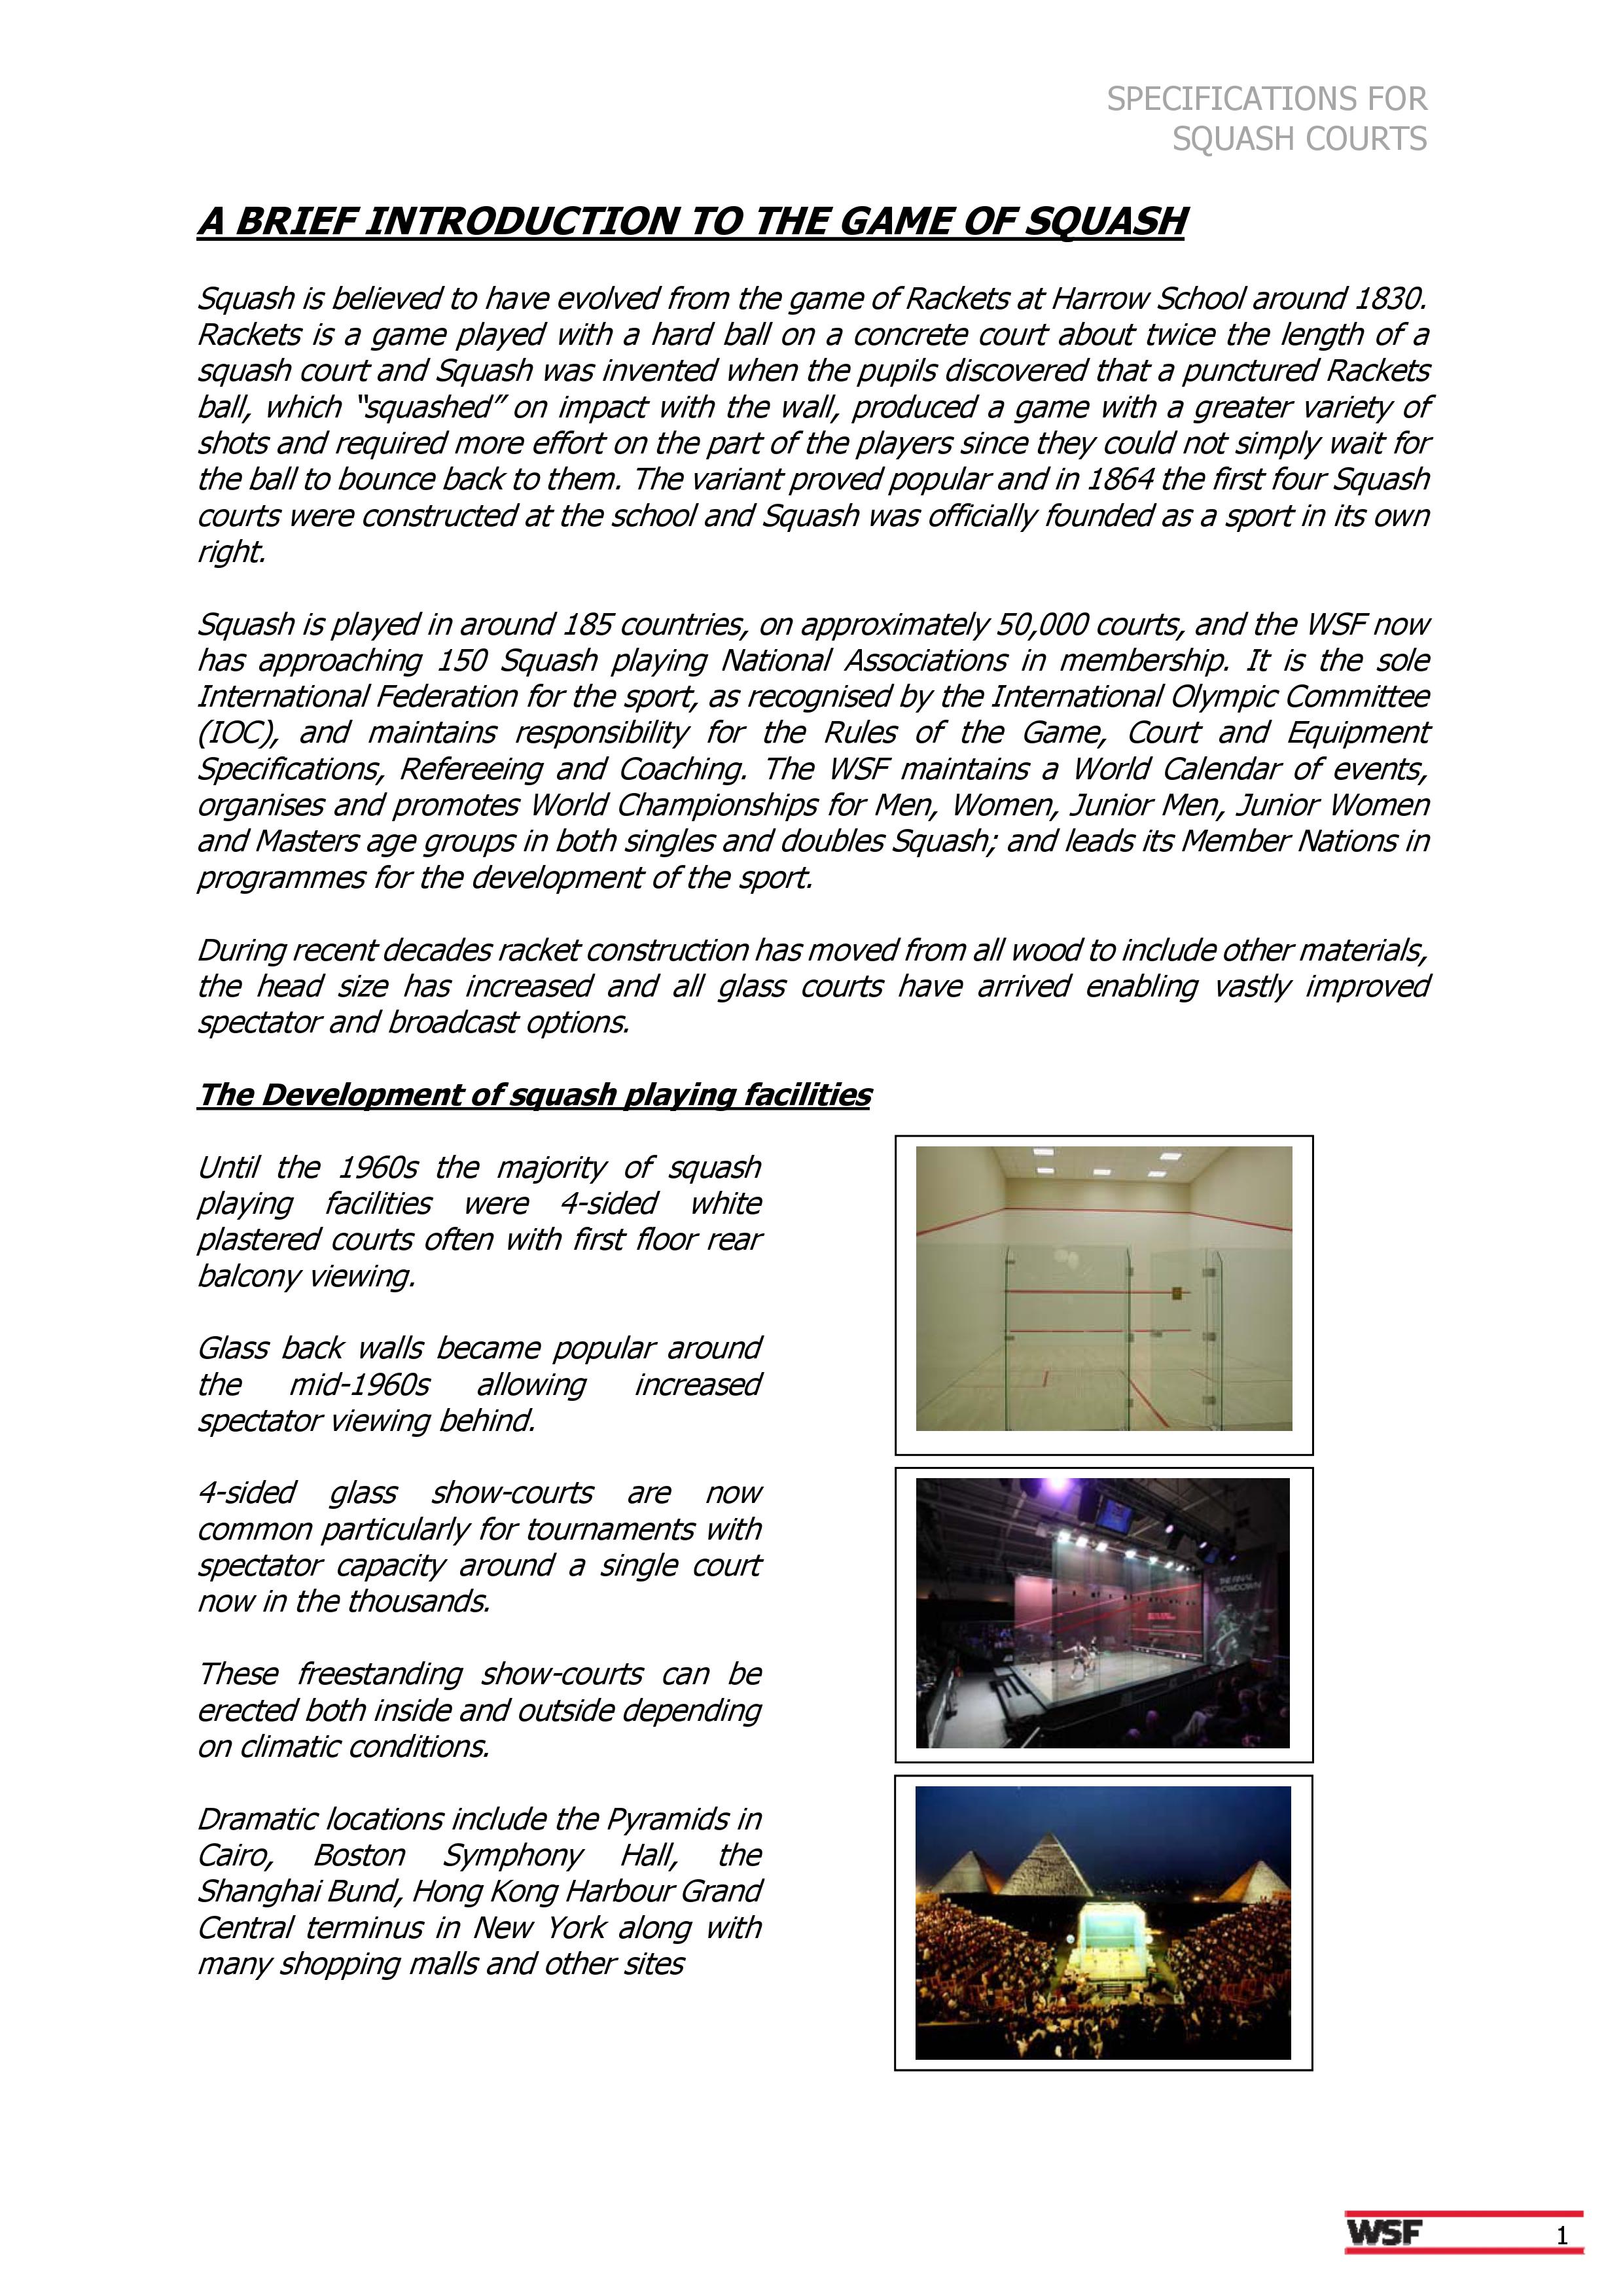 World Squash Federation Squash Court Specifications - Global Squash Coach - Page 3.jpg